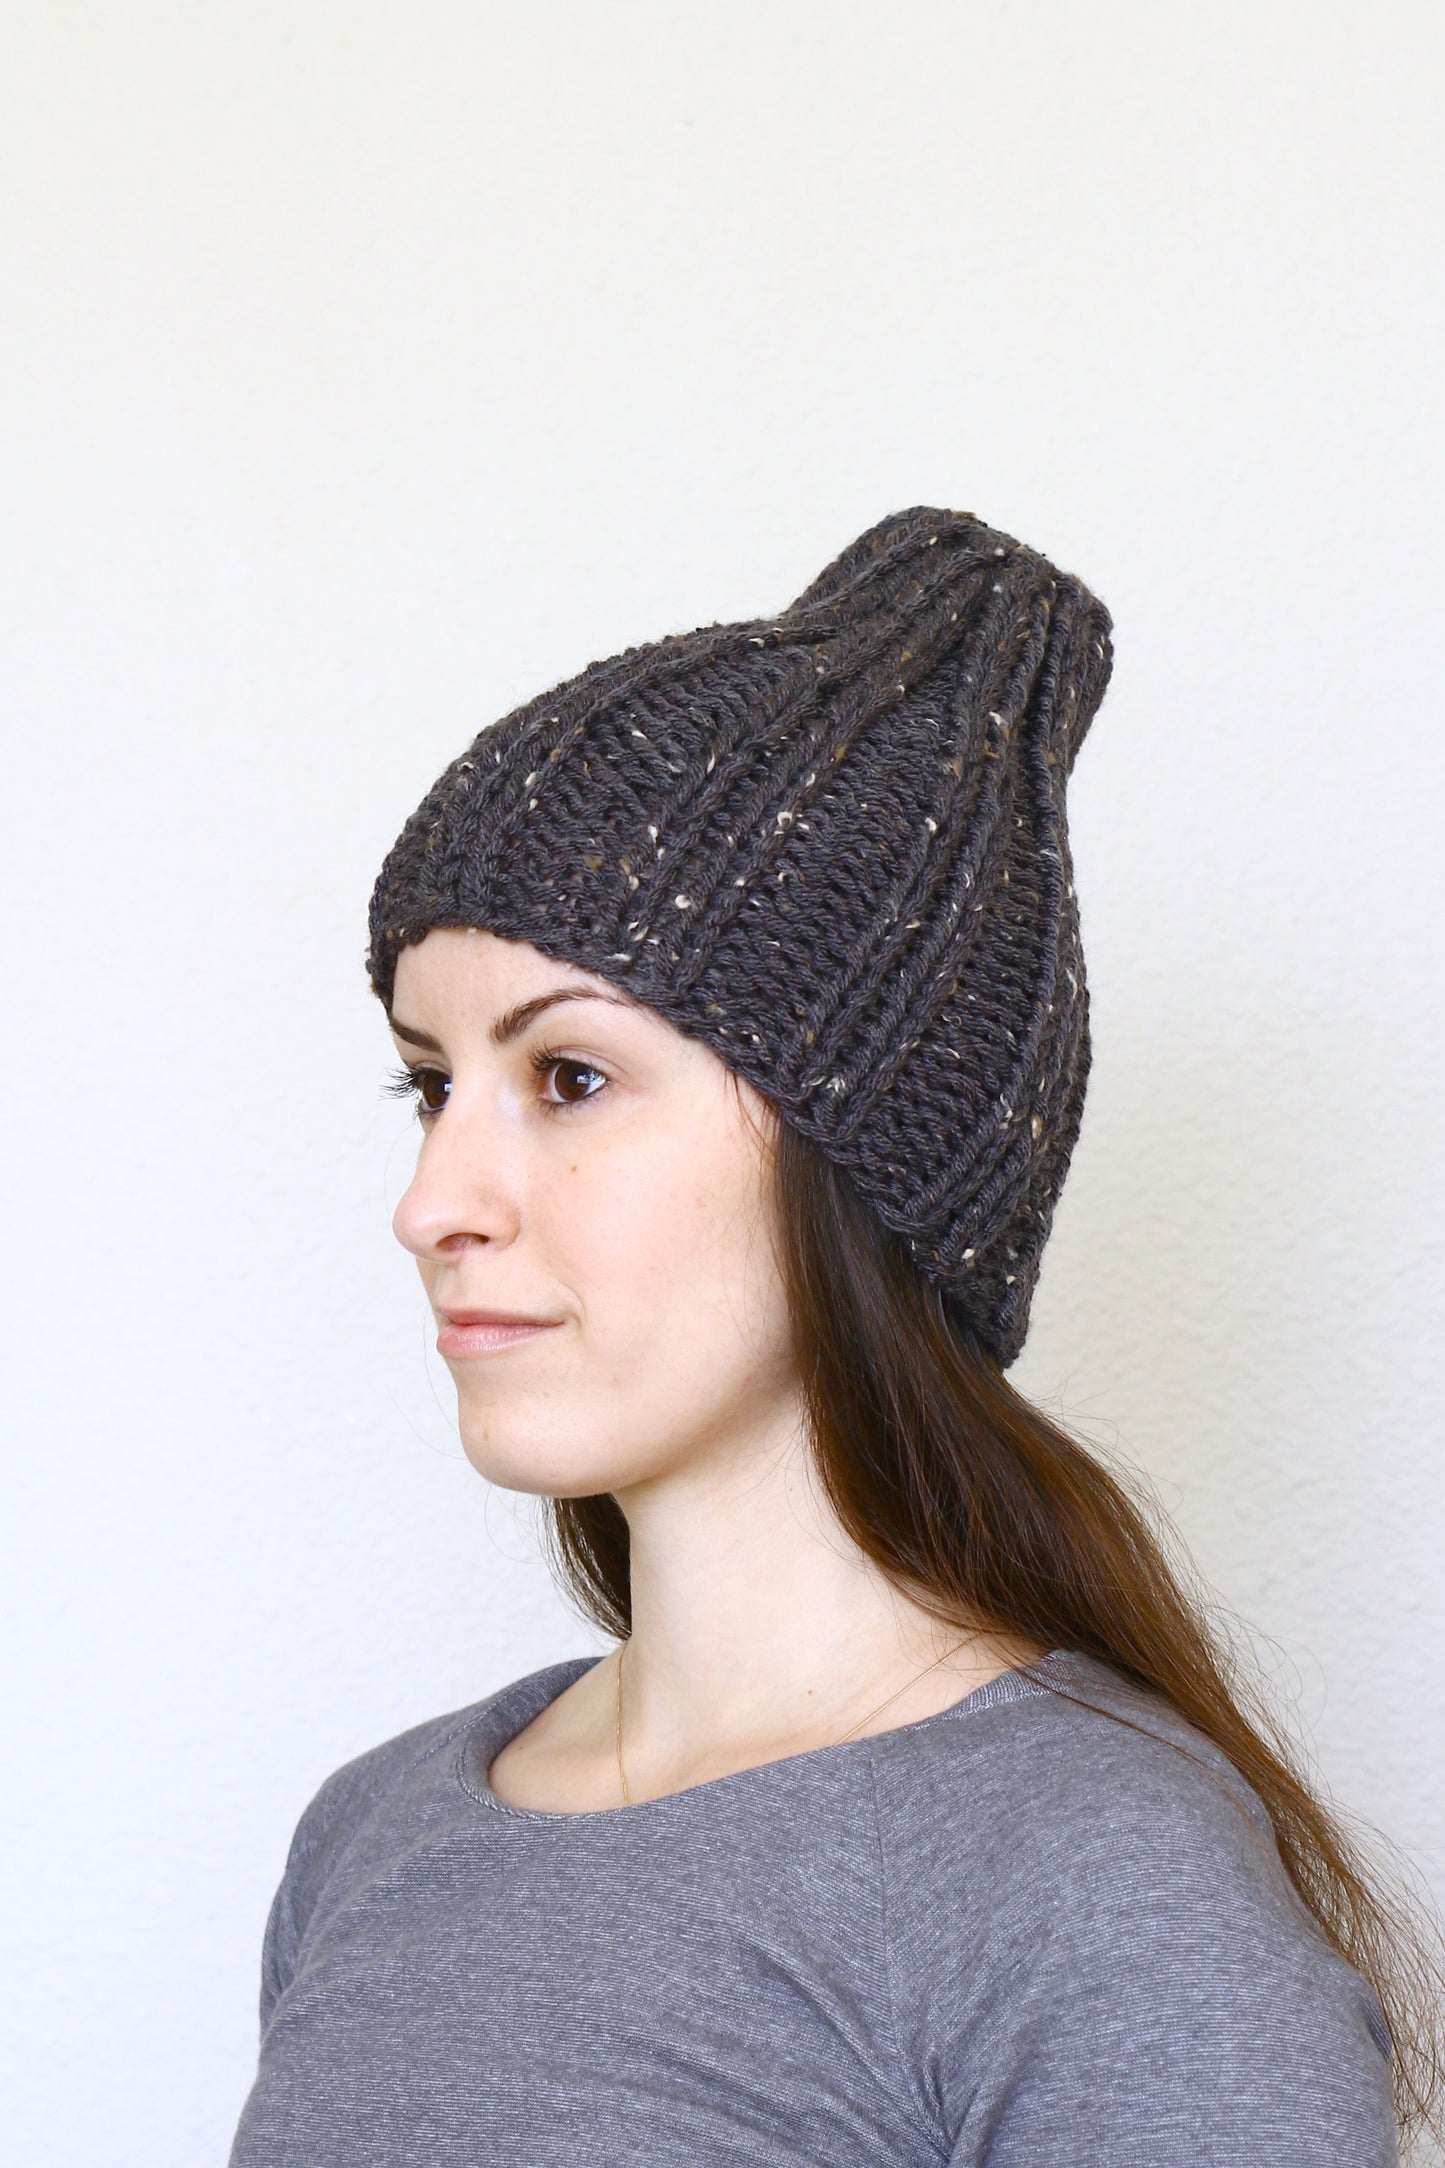 Knit beanie hat, ski hat in dark grey color